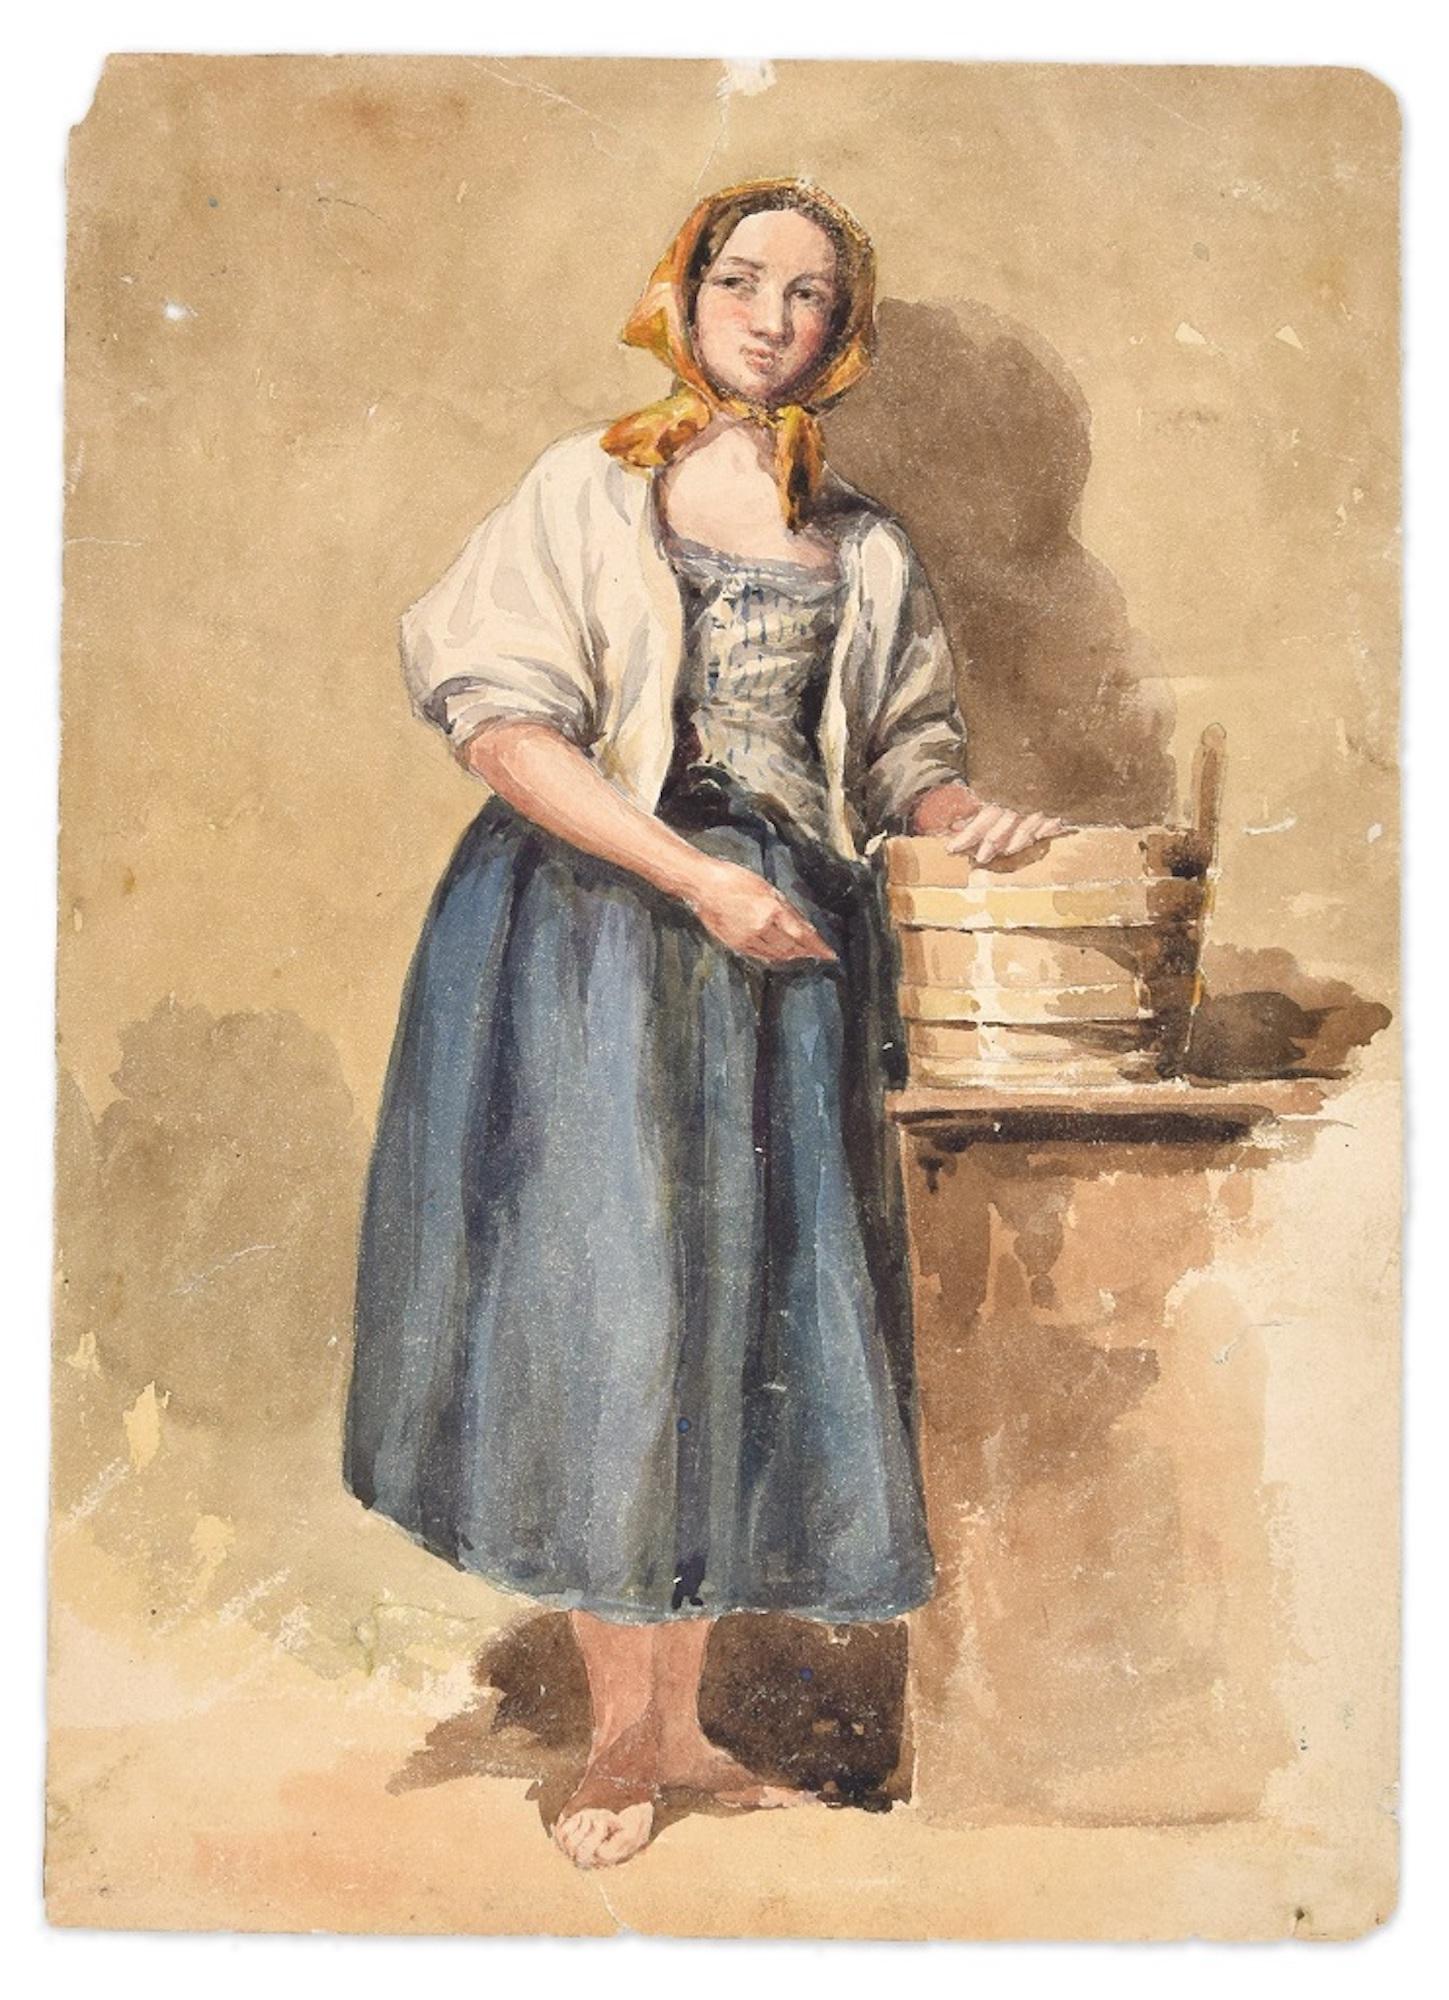 Agostino Aglio Figurative Art - Country Woman -Original Ink and Watercolor by A. Aglio - Early 19th Century